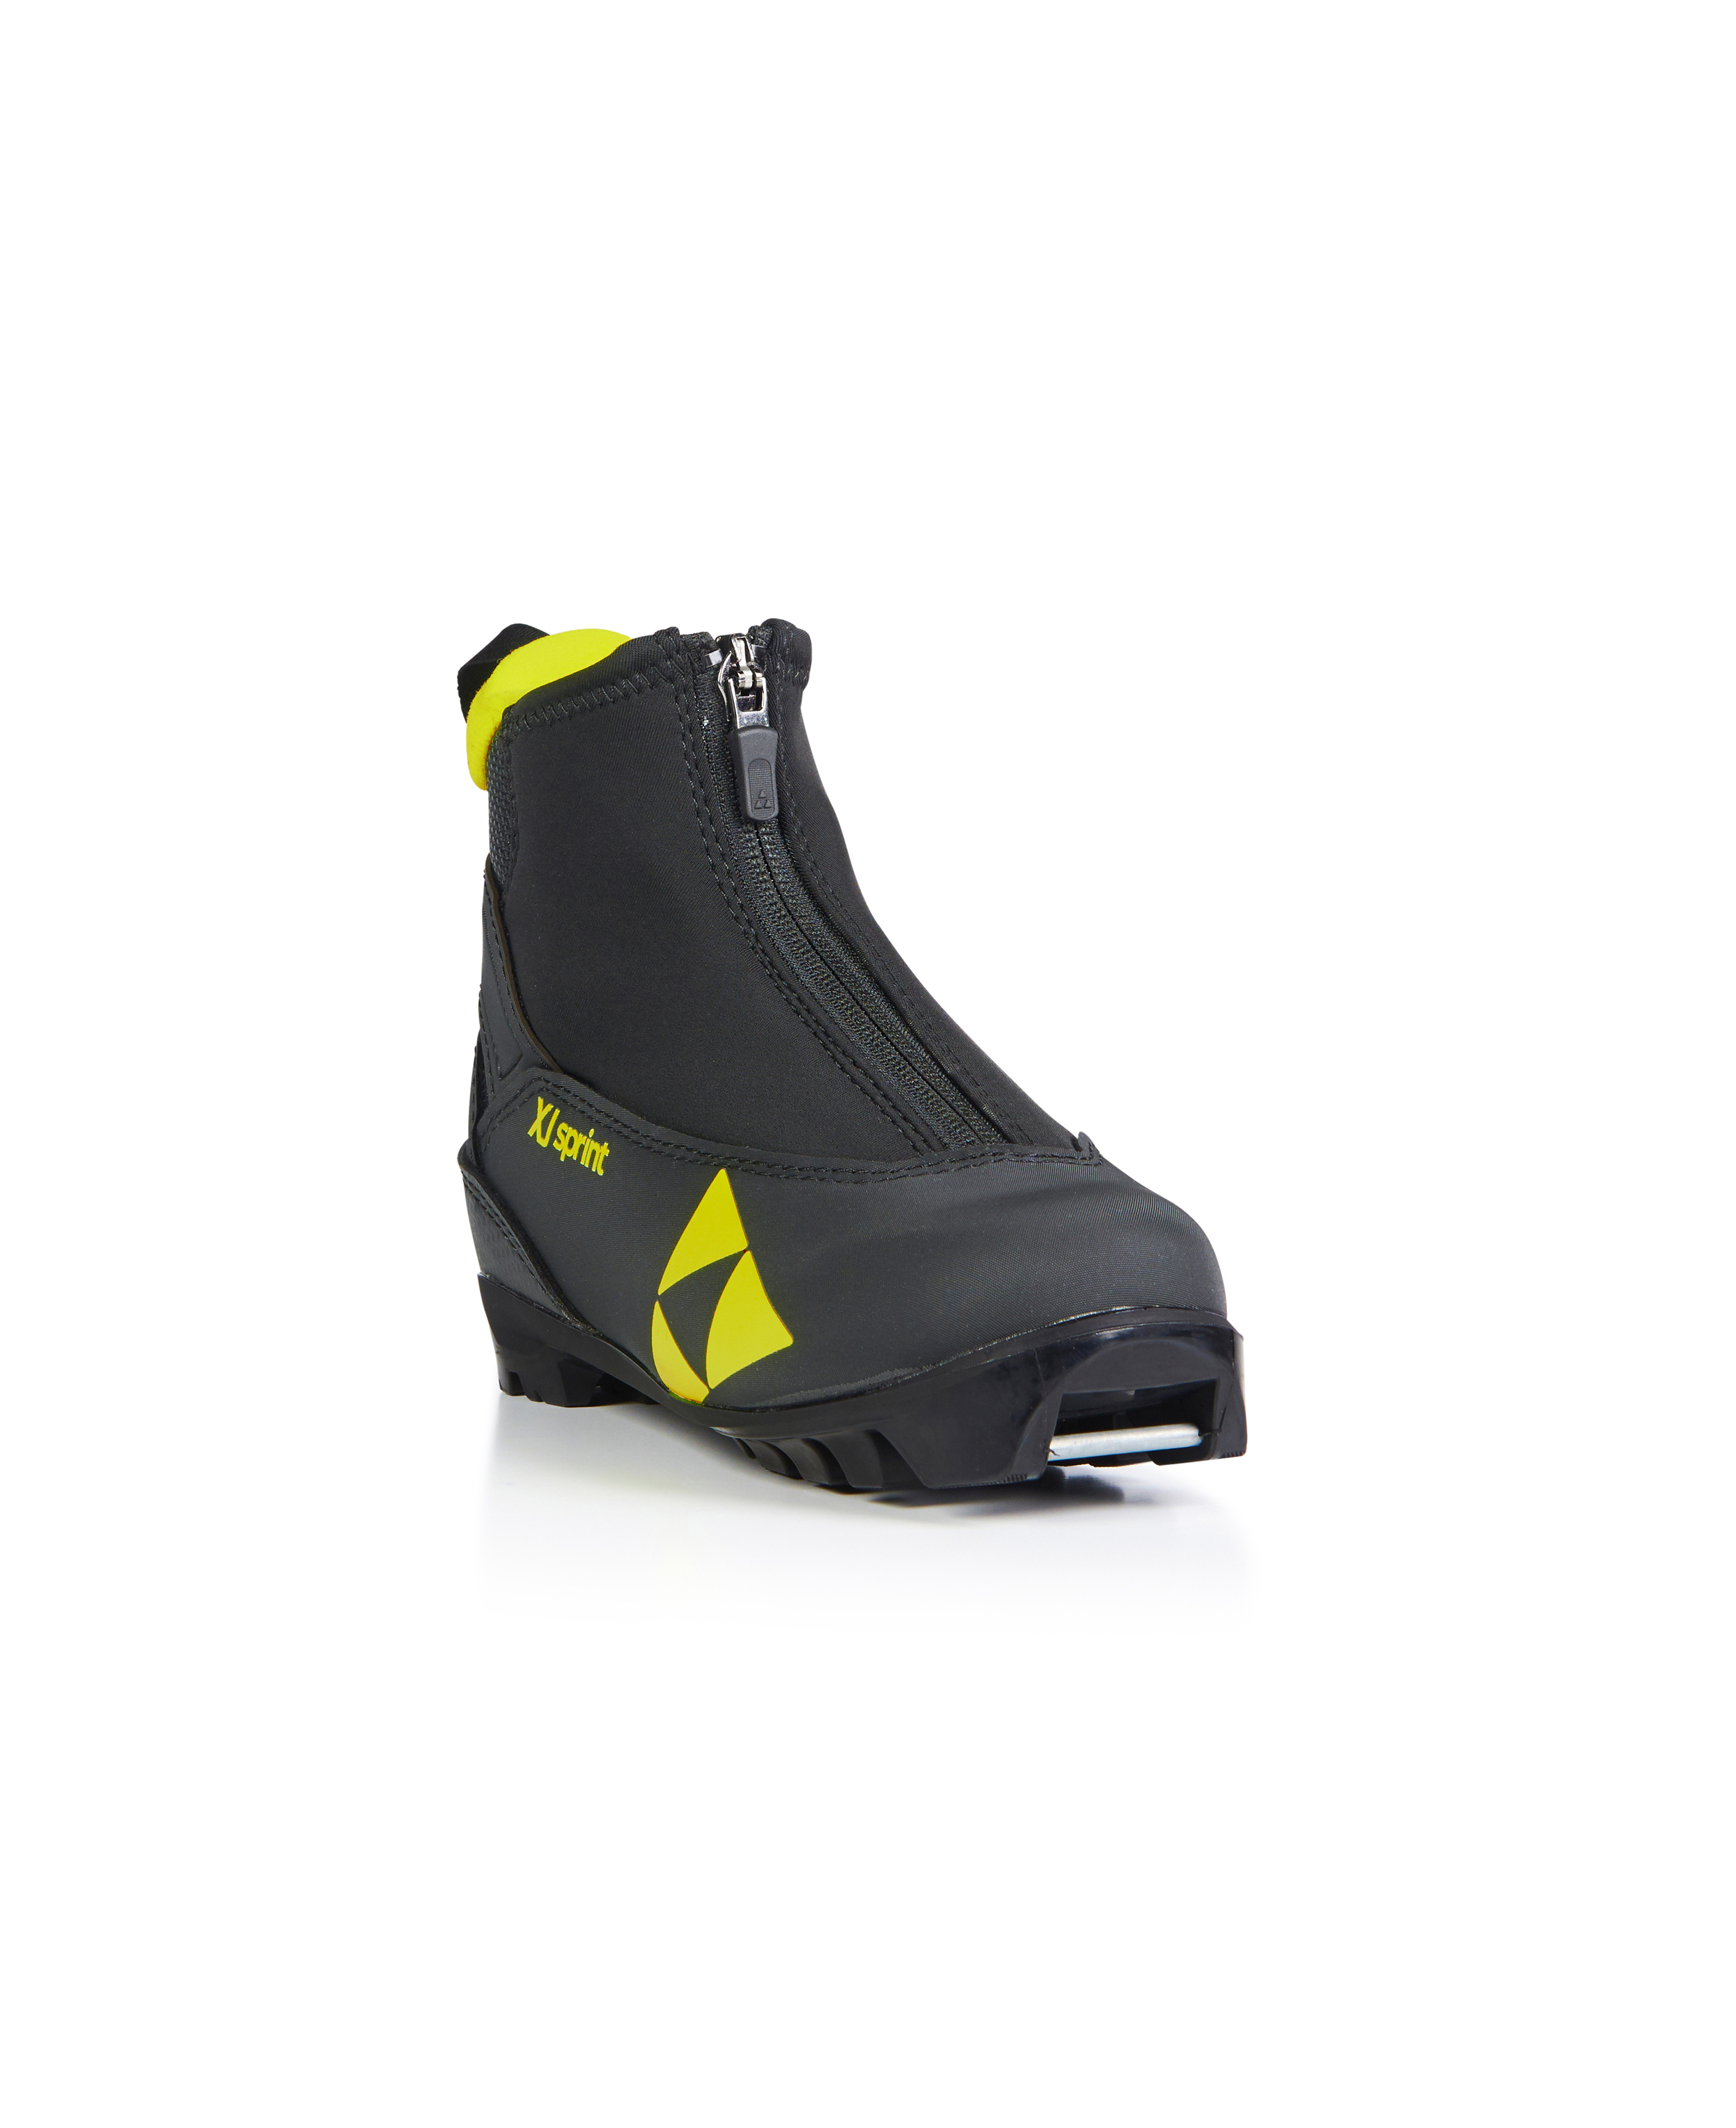 Fischer 2019 XJ Sprint Junior Cross Country Ski Boots